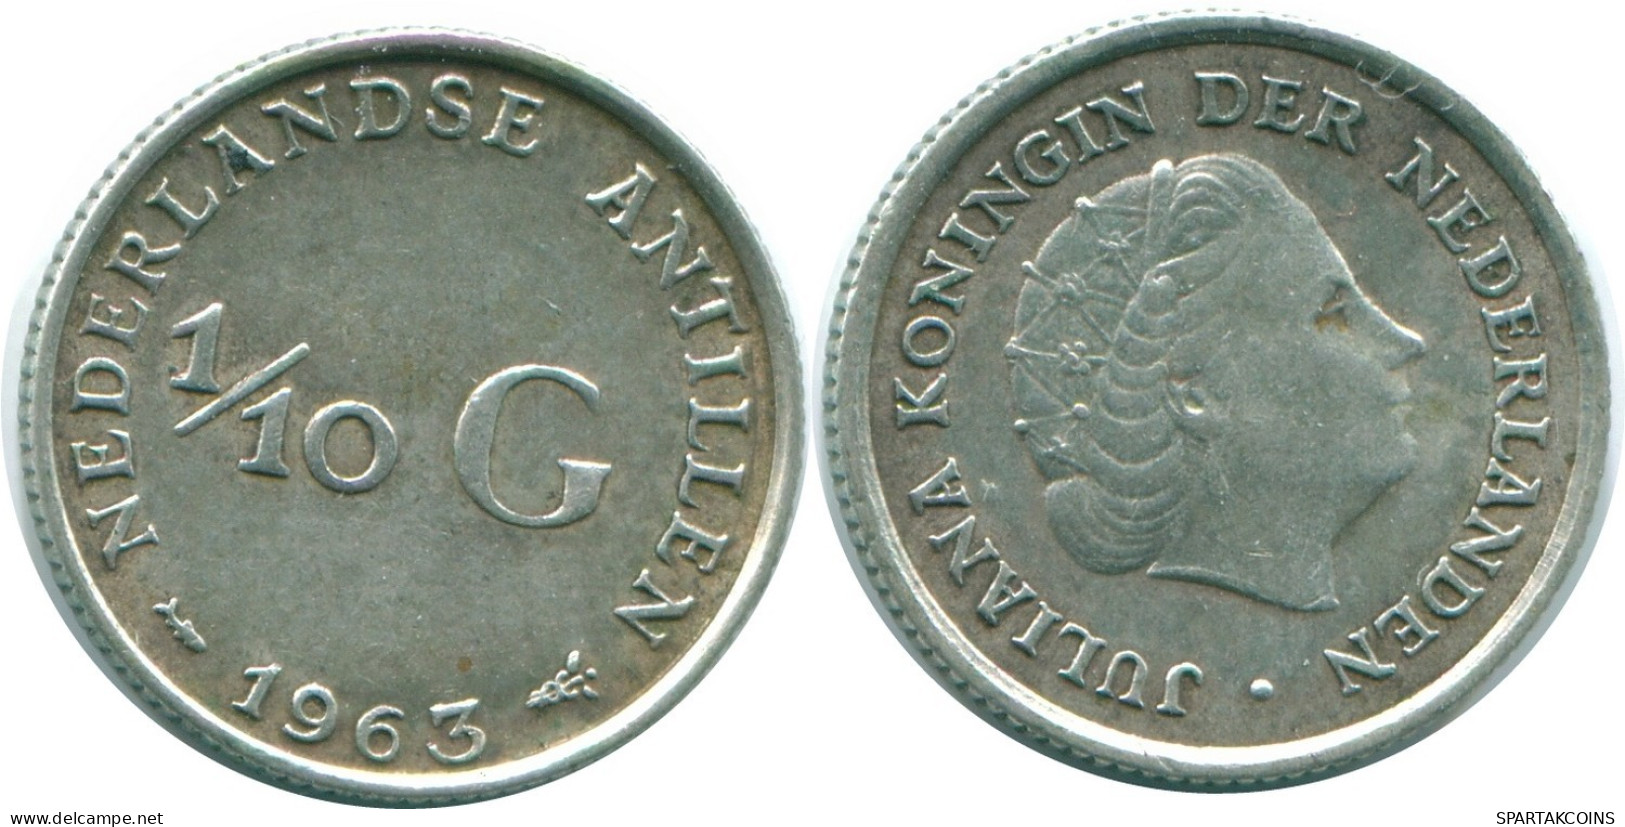 1/10 GULDEN 1963 NETHERLANDS ANTILLES SILVER Colonial Coin #NL12487.3.U.A - Niederländische Antillen